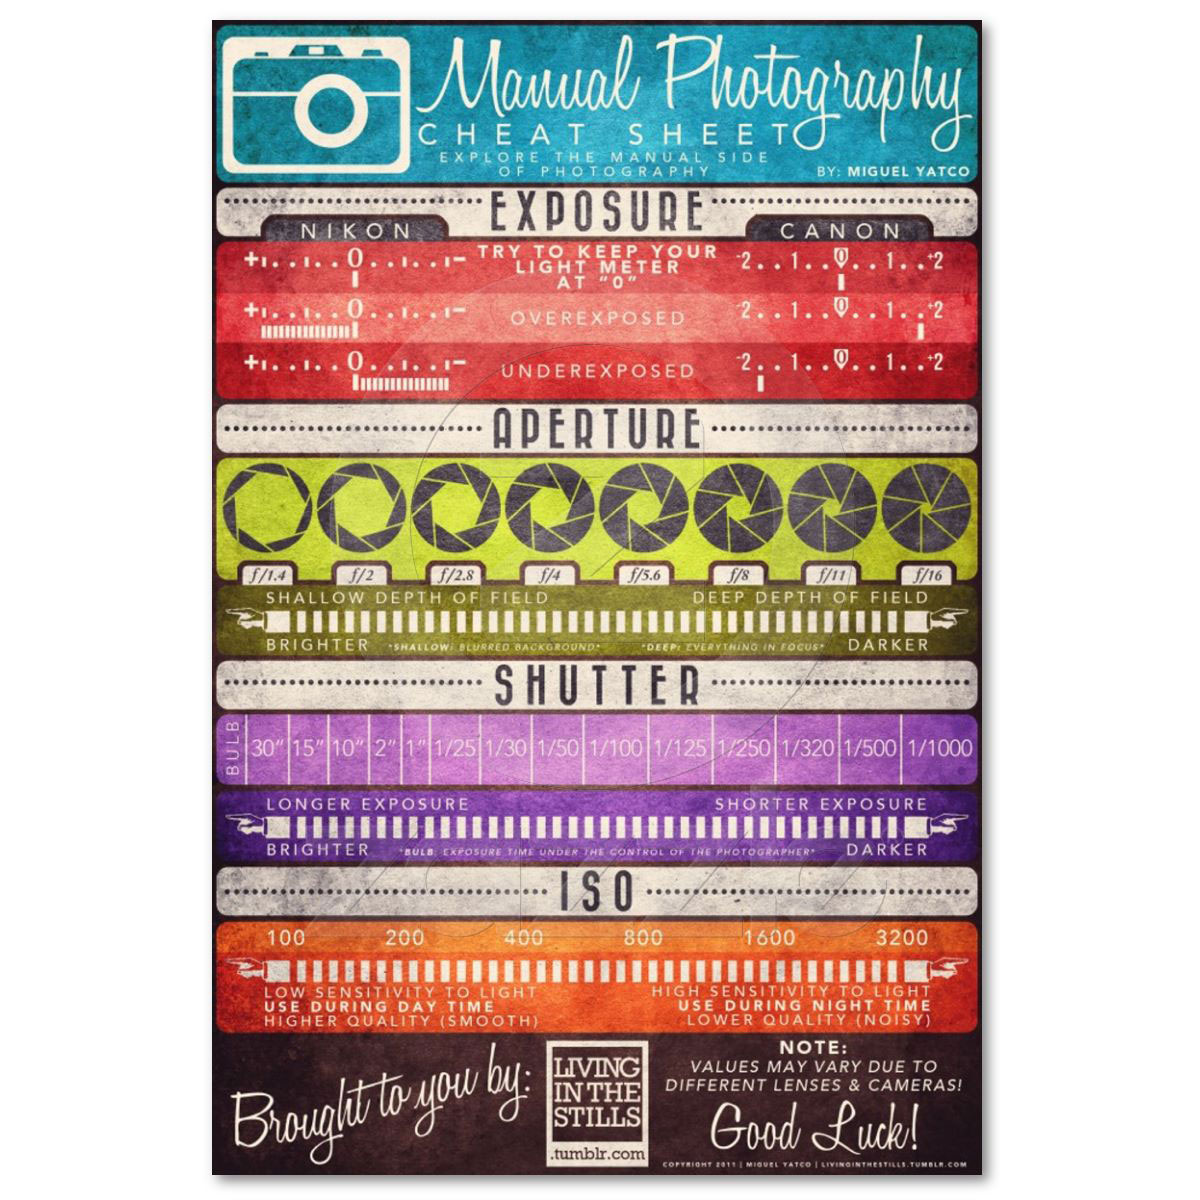 Manual Photography Cheat Sheet